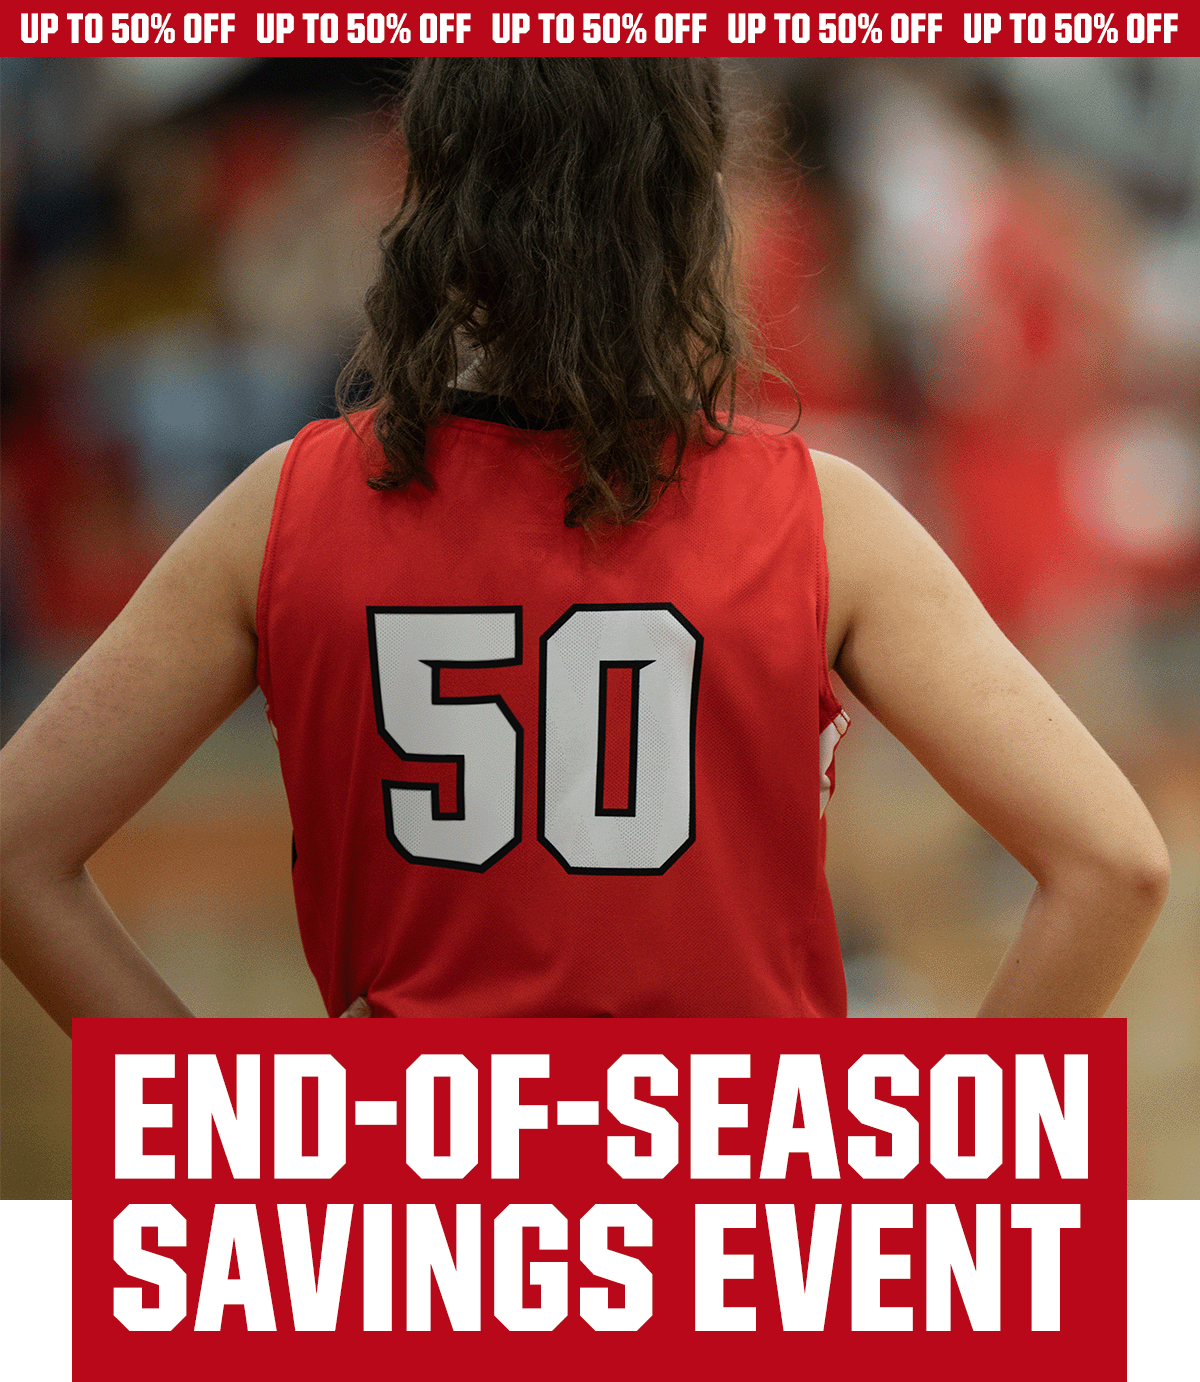 End-of-season savings event.